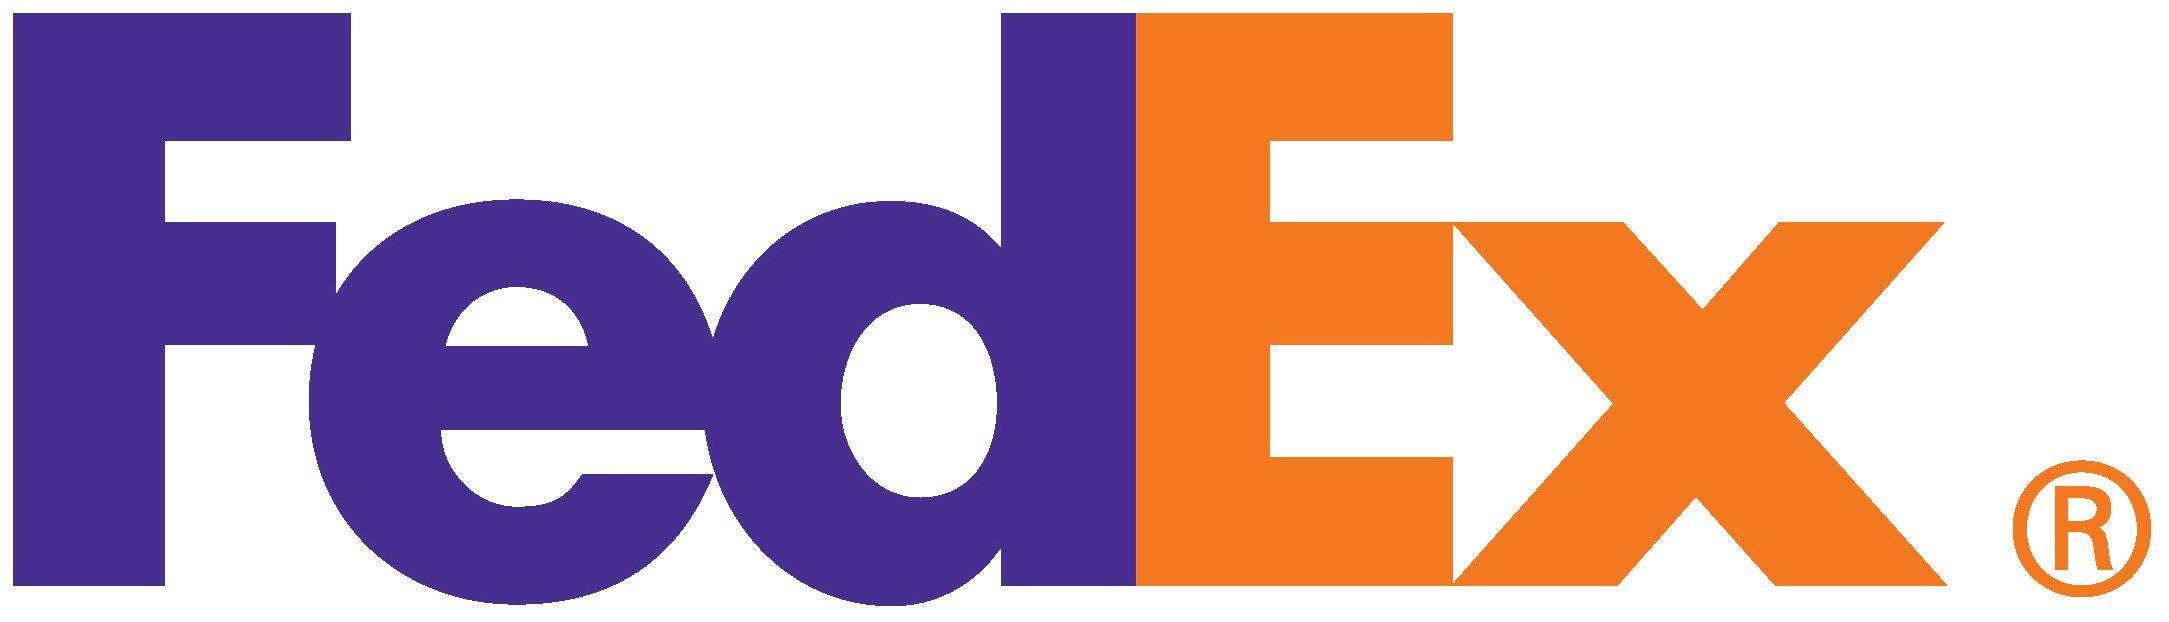 FedEx Corporate Logo - fedex logo. ololoshenka. Oil painting on canvas, Painting, Logos